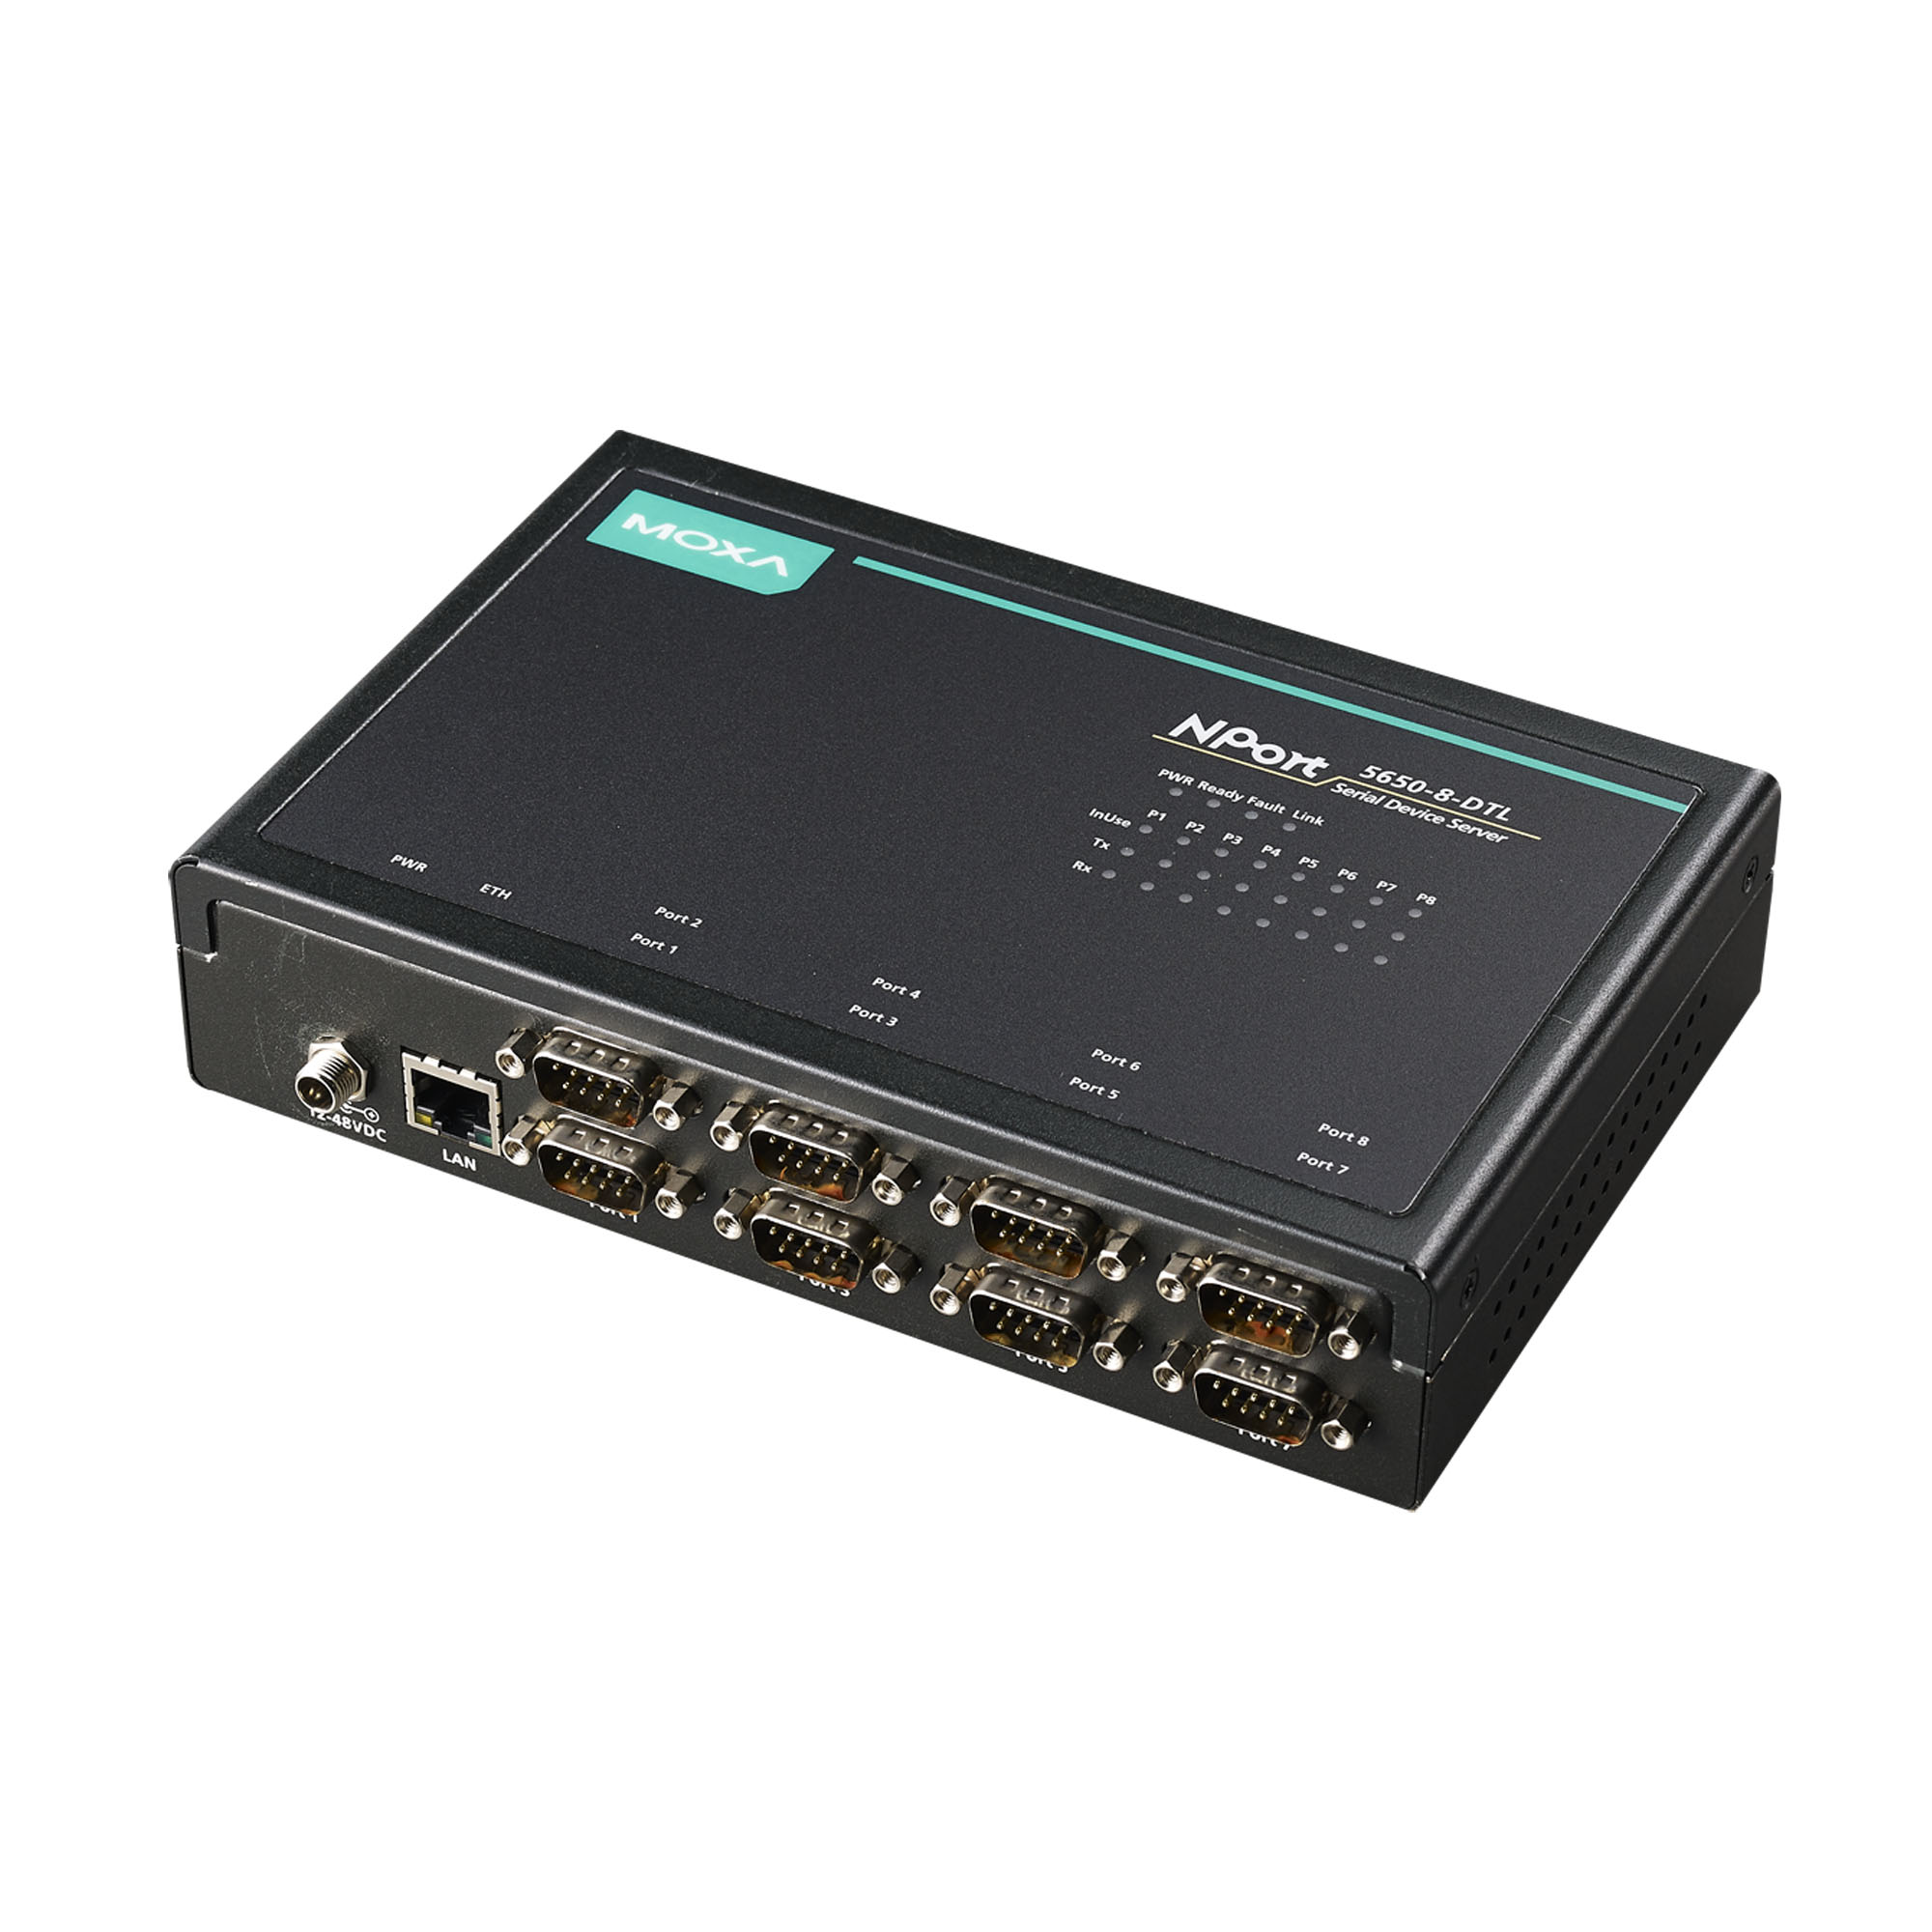 NPort 5600-DTL Series - General Device Servers | MOXA